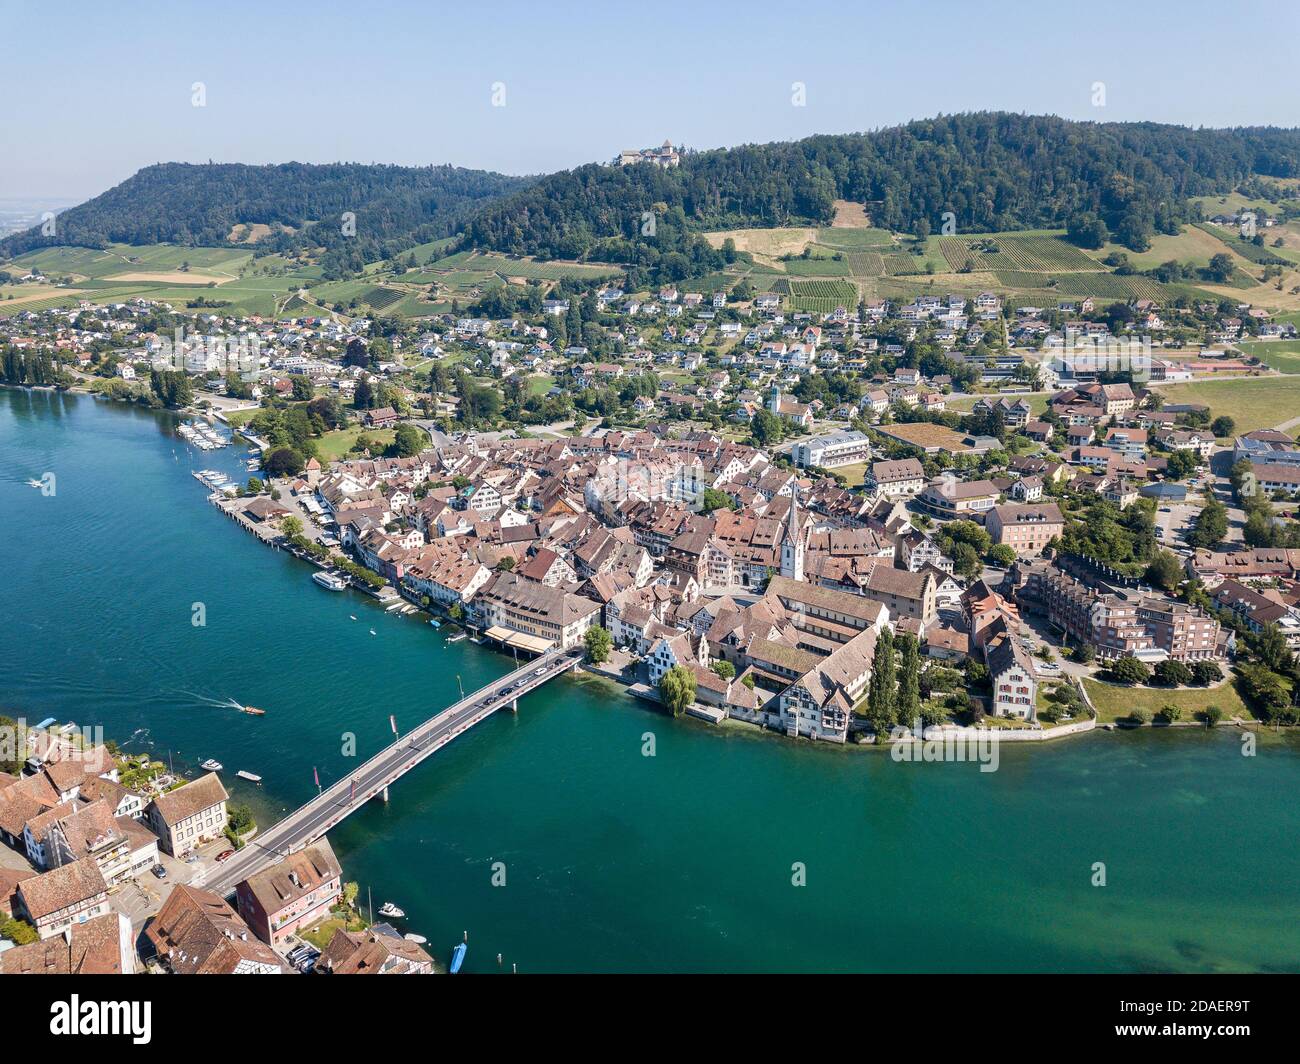 Aerial image of Swiss old town Stein am Rhein - a famous tourist destination in Switzerland Stock Photo